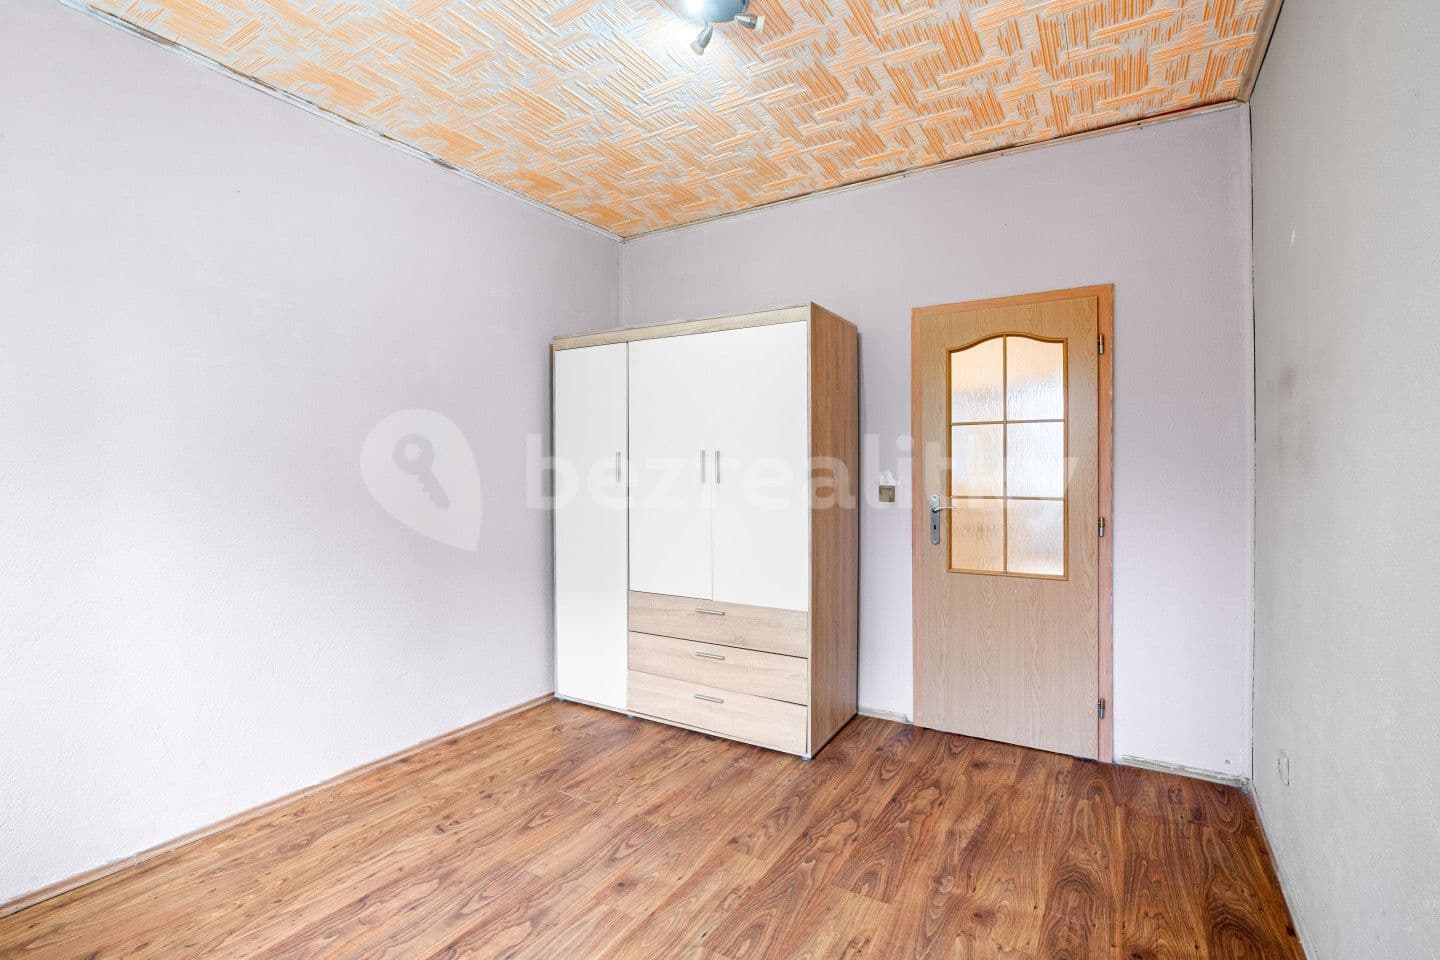 2 bedroom flat for sale, 50 m², Zrenjaninská, Teplice, Ústecký Region